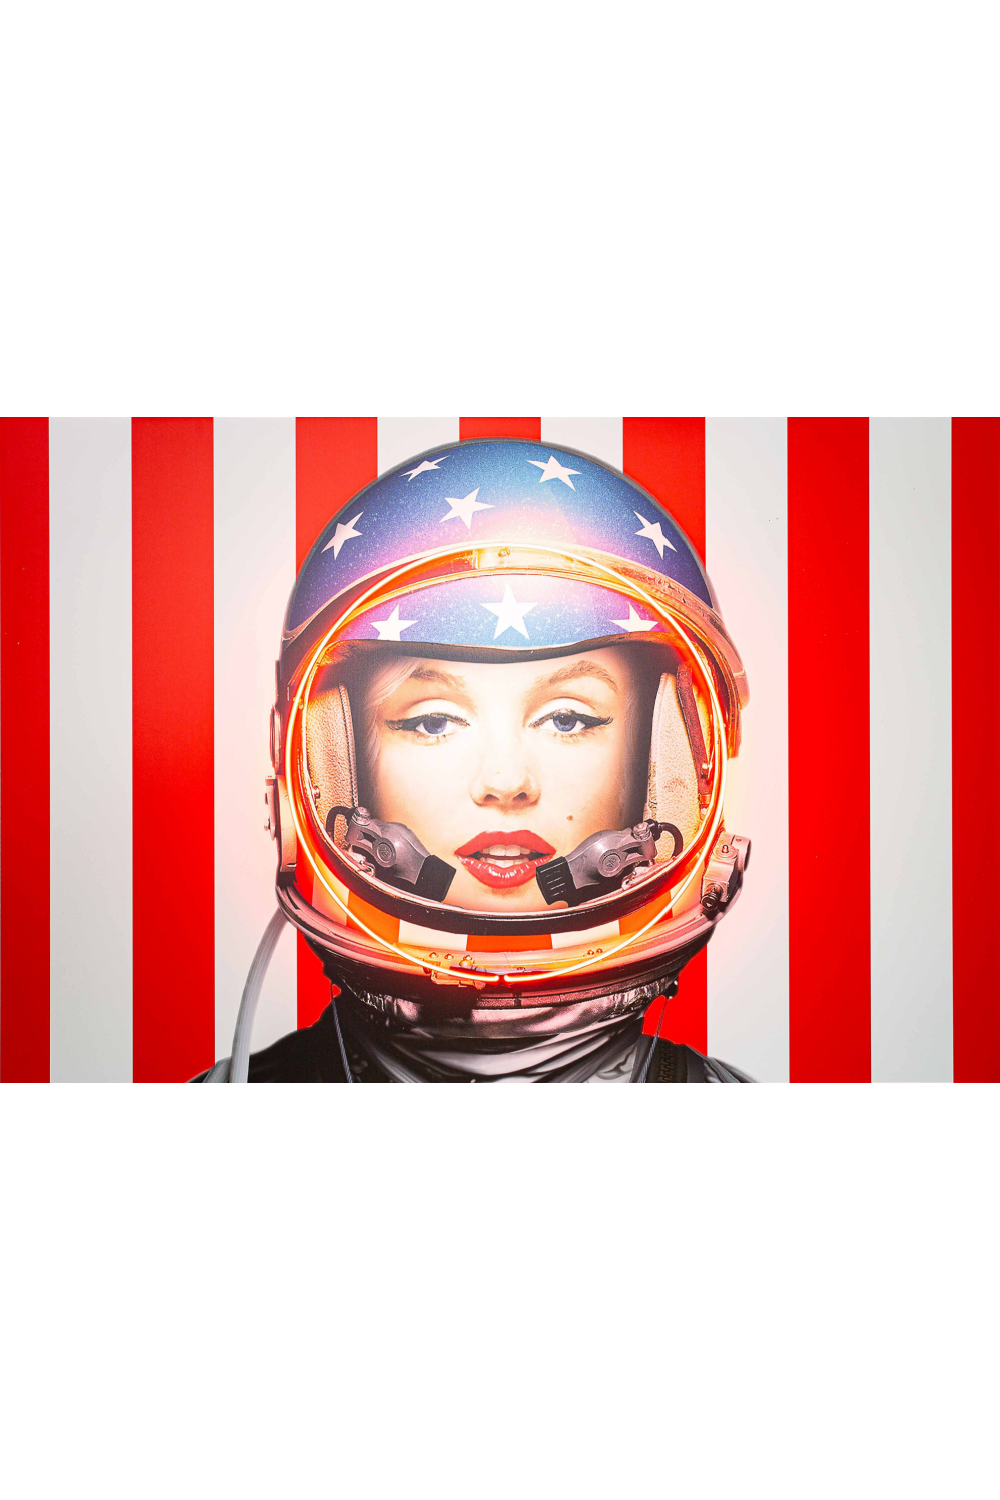 Iconic Retro Neon Artwork | Andrew Martin Marilyn Astronaut | Oroa.com